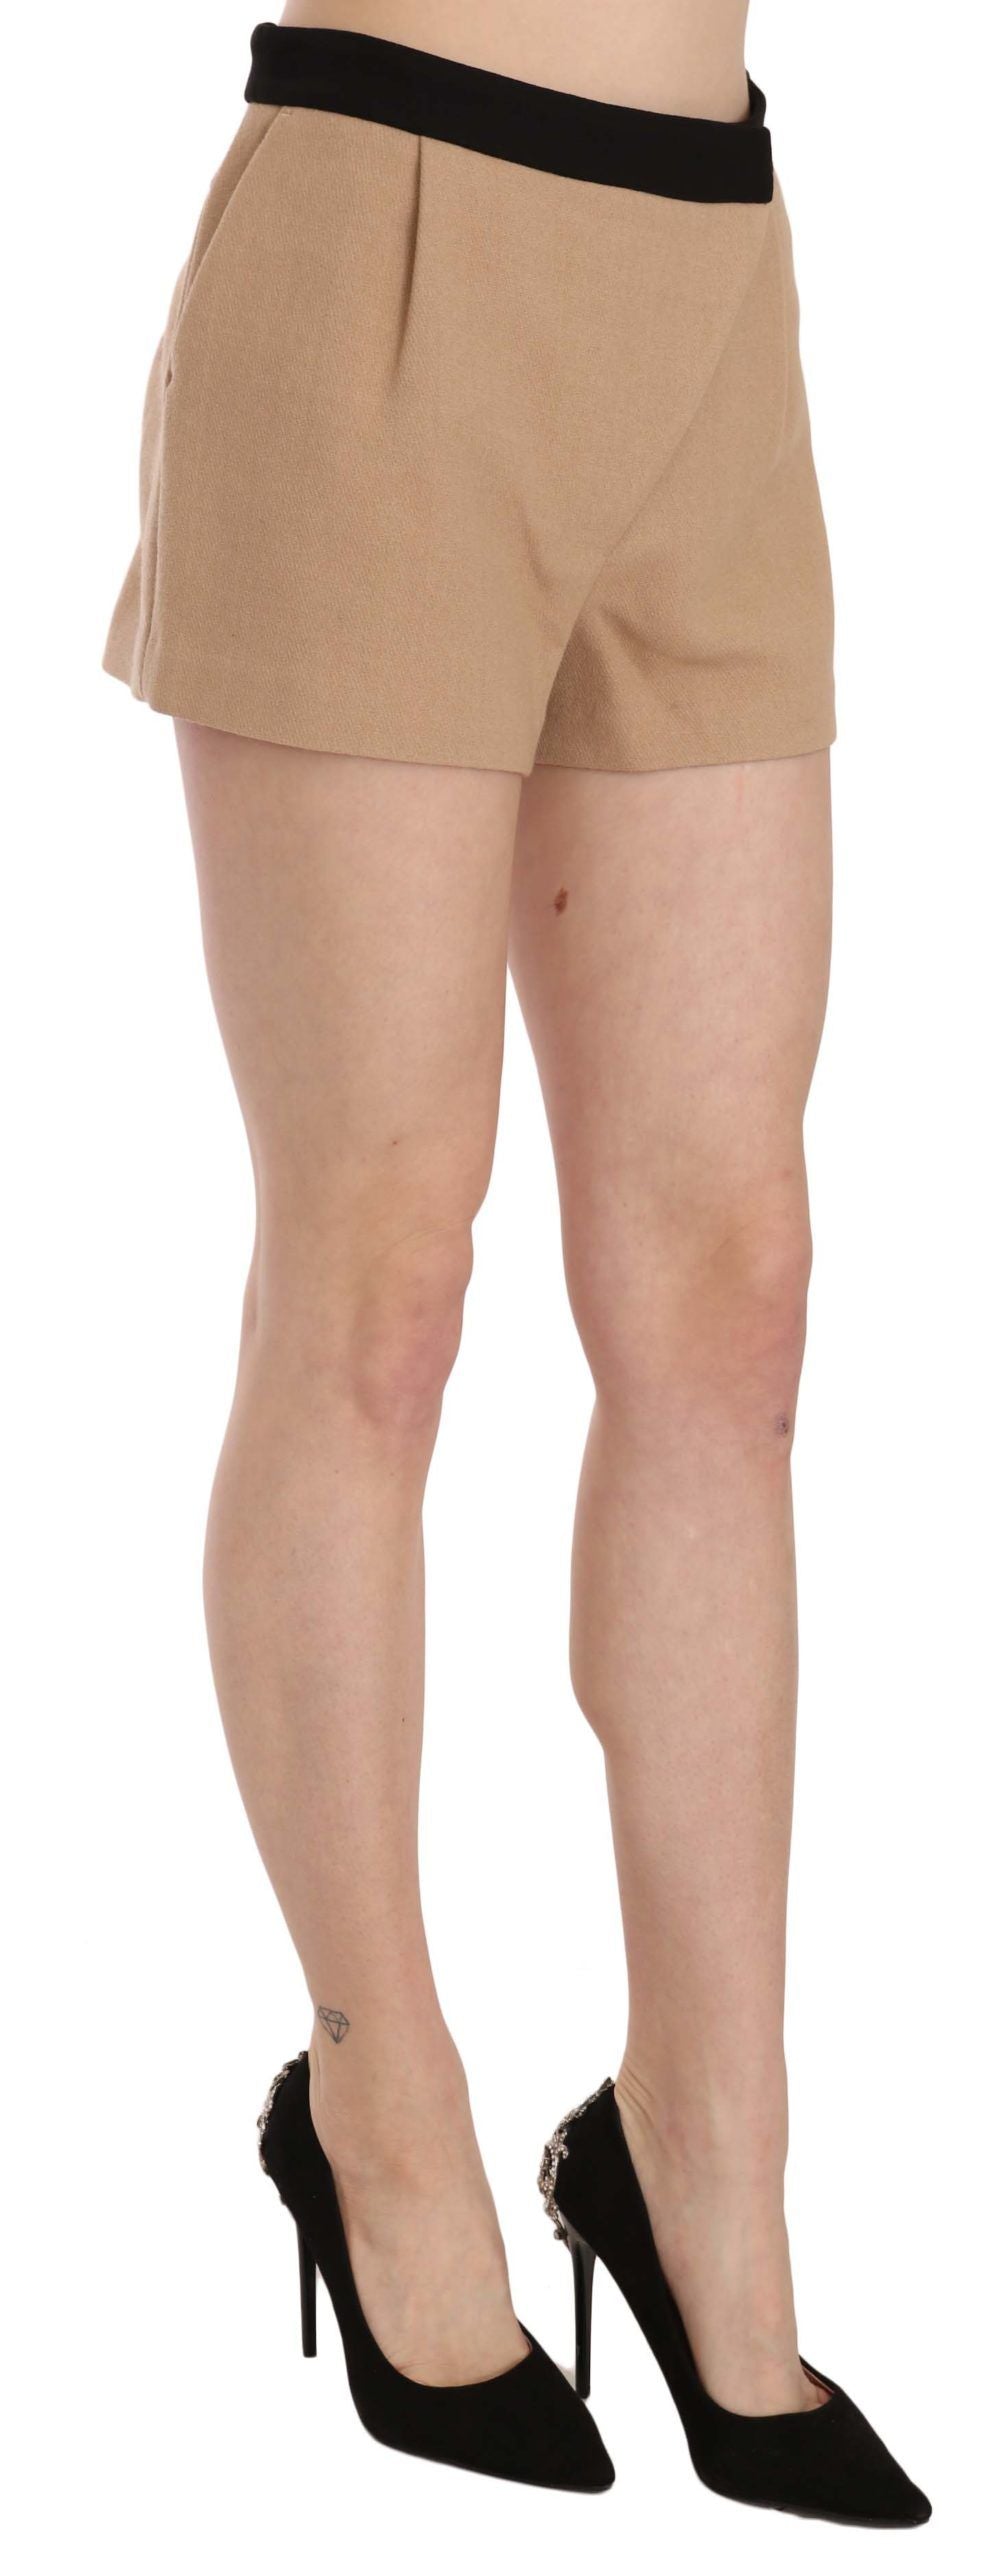 Kostüm National Shorts Beige Cotton Mid Taille Mini Short